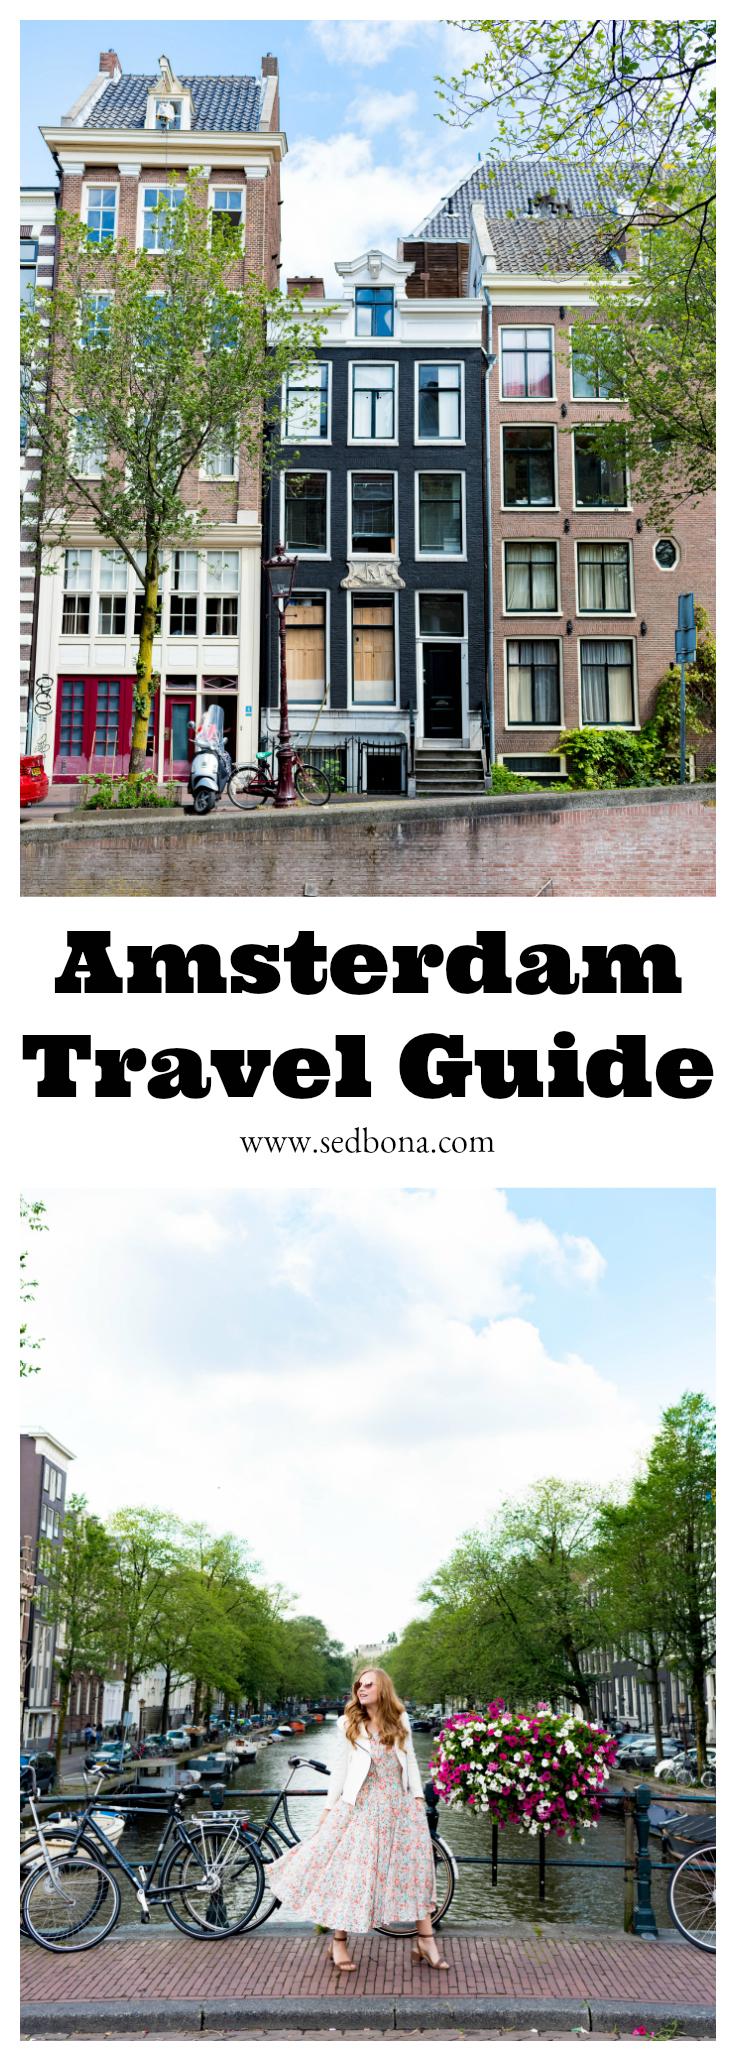 Amsterdam Travel Guide Sed Bona